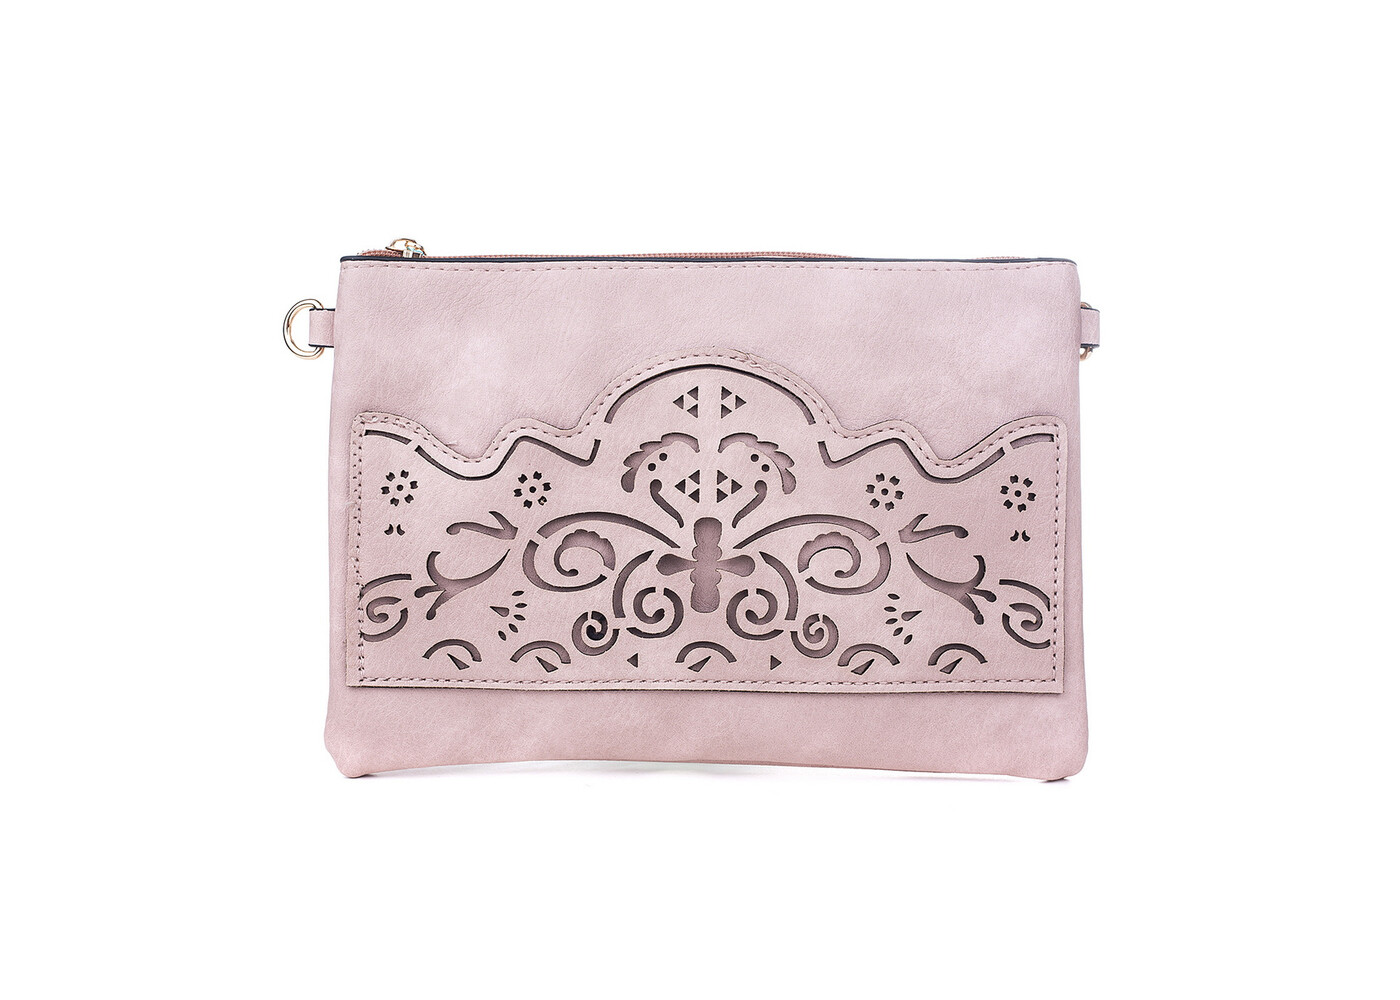 Ivys Clothing & Fashion Accessories Dusty Pink Crossover Handbag